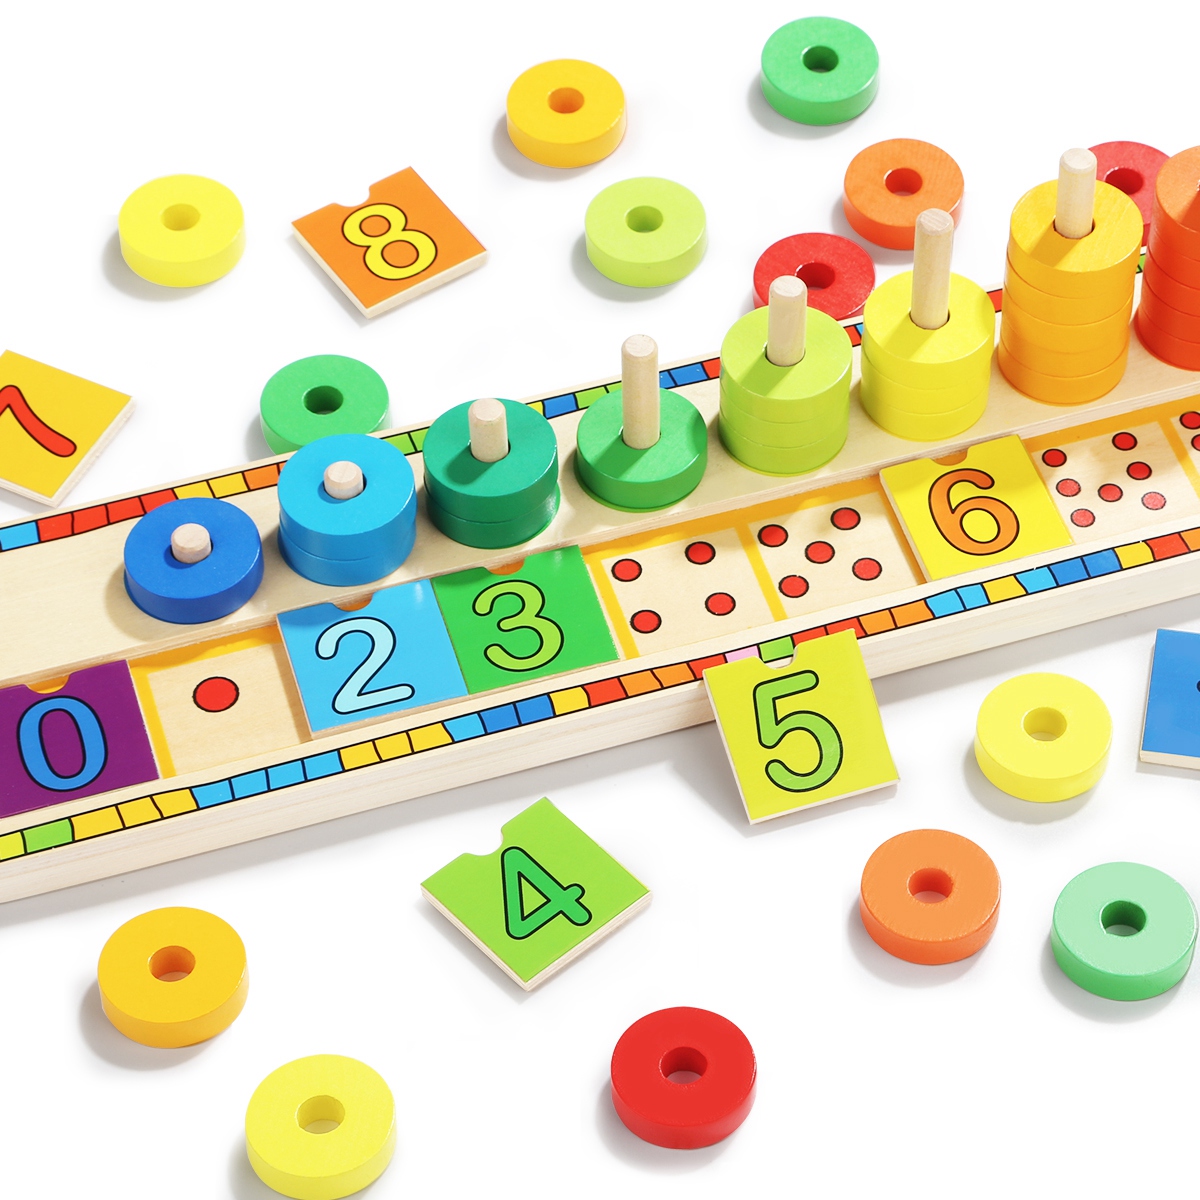 TopBright-6540-Blocks-Montessori-Classic-Math-Rainbow-Donuts-Box-Educational-Toys-for-Kids-1379243-5